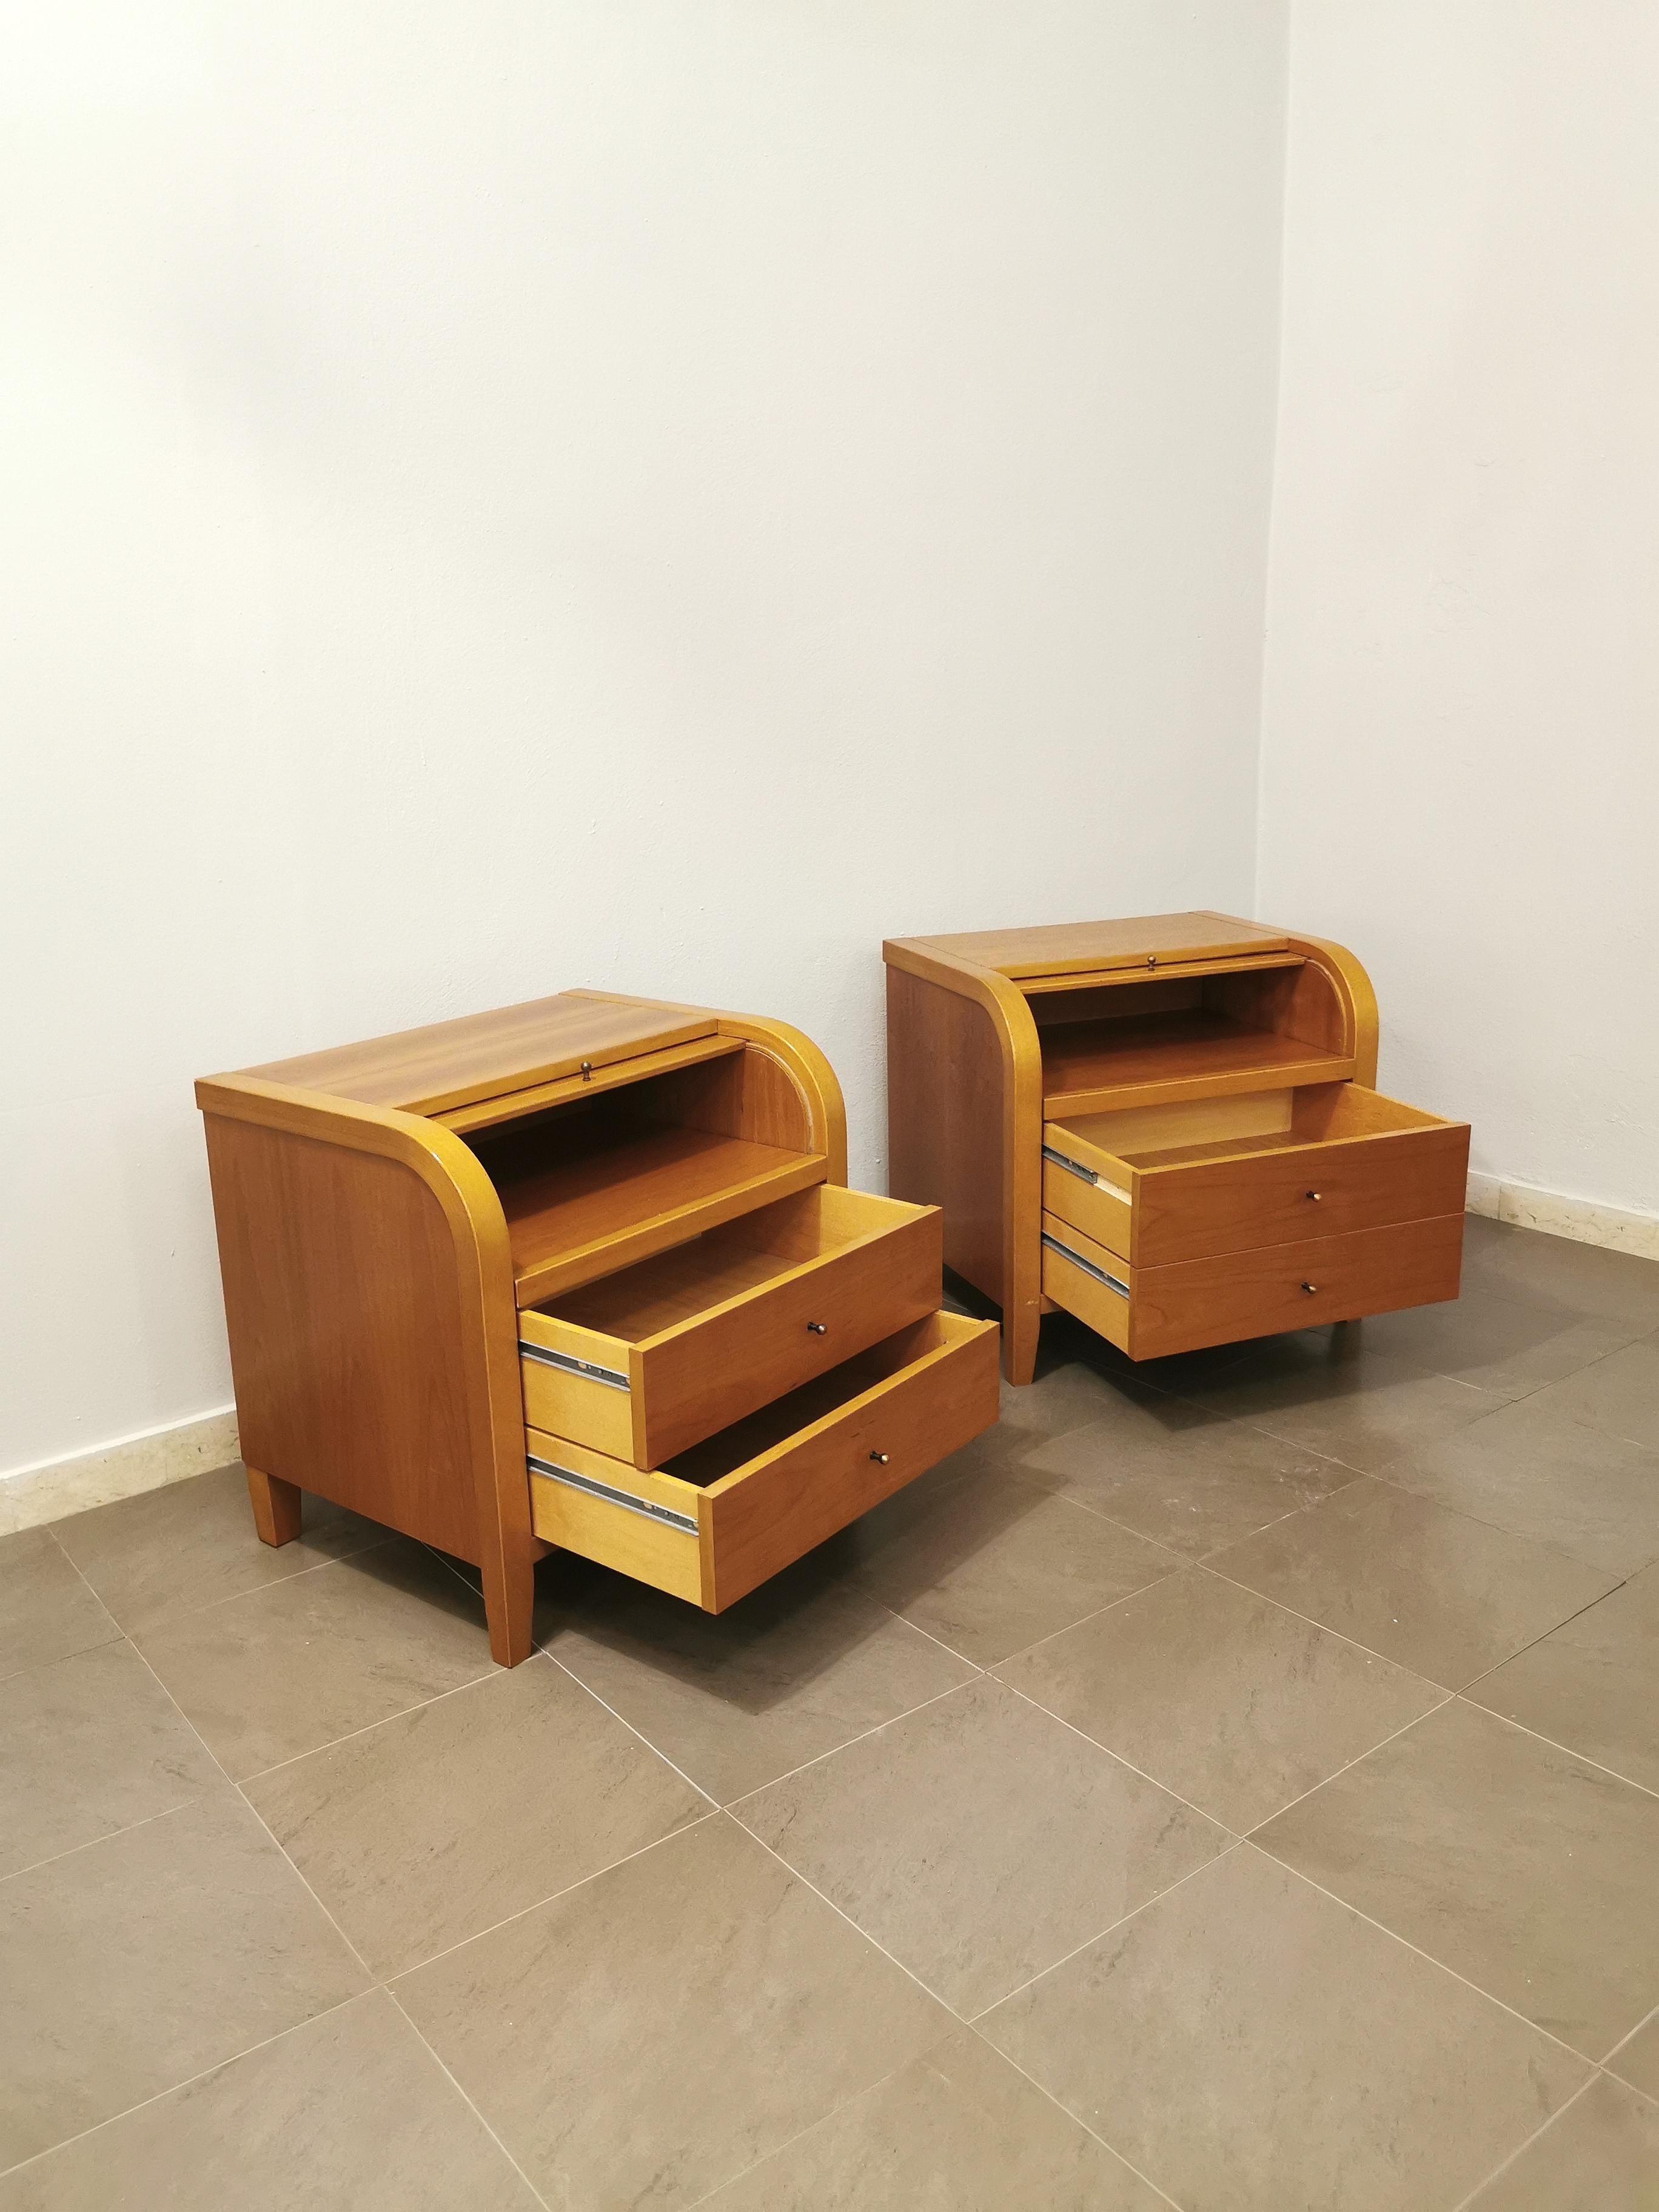 90s wood furniture